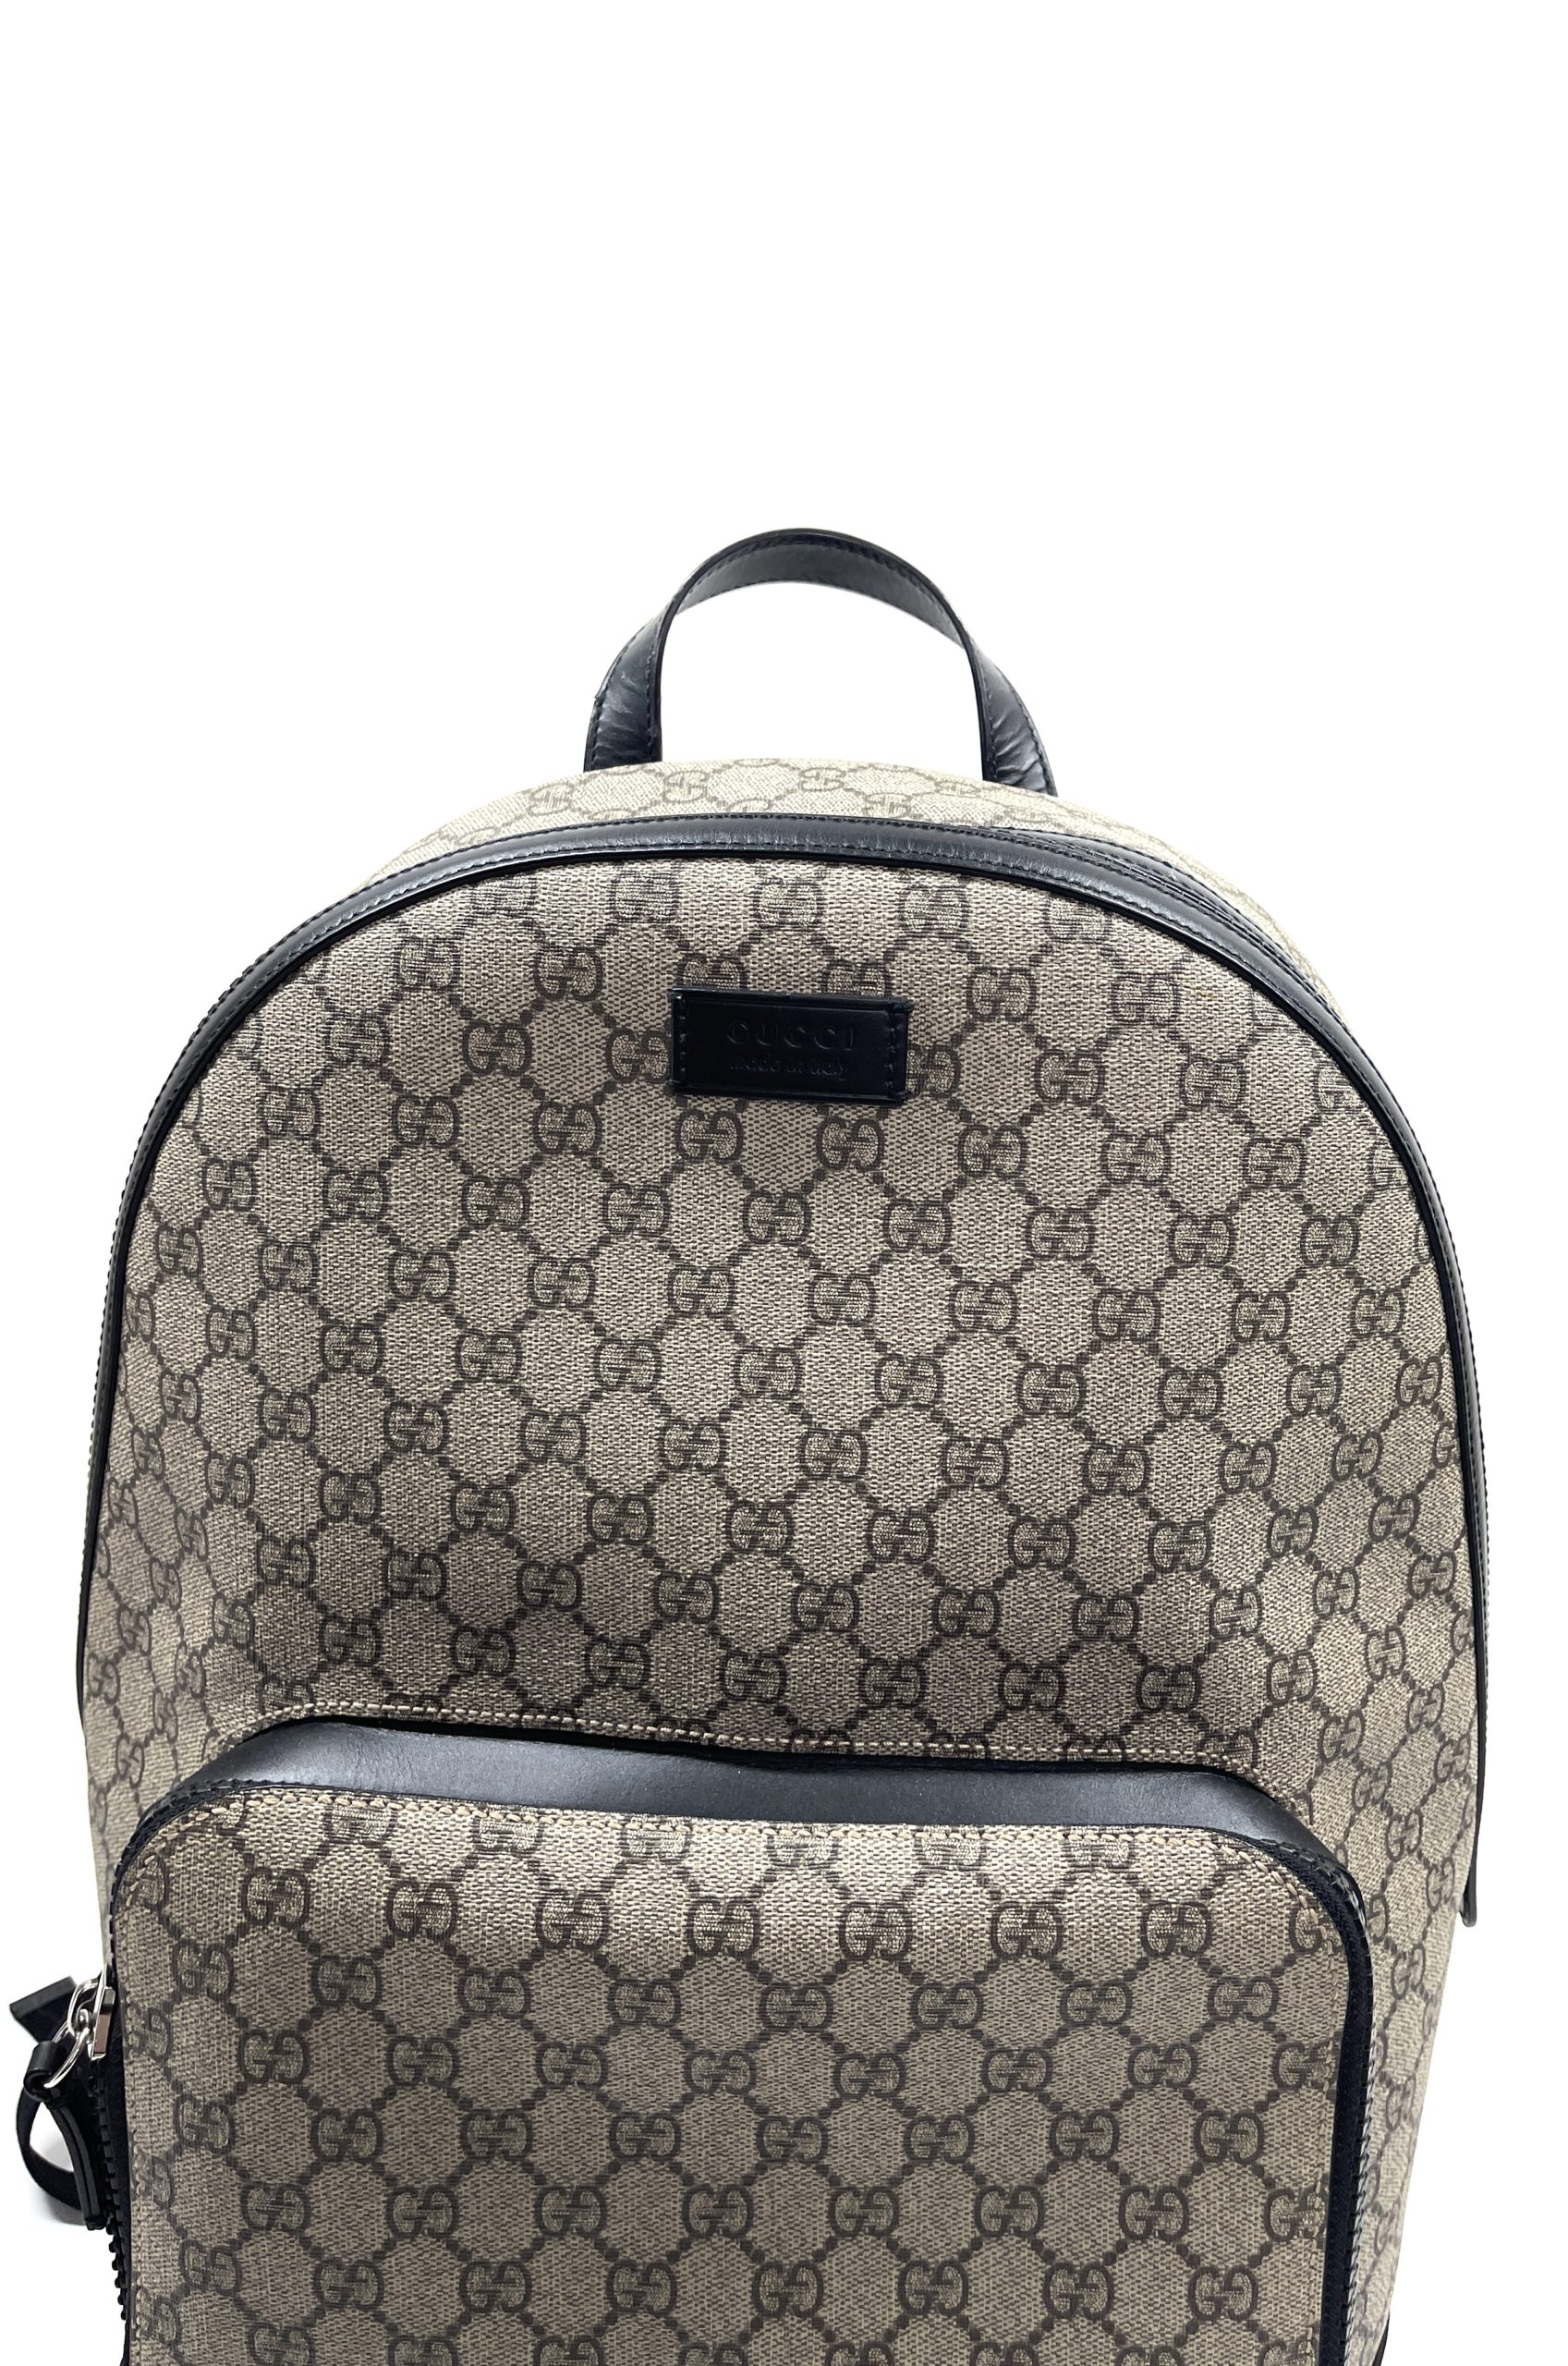 Gucci Men's GG Supreme Medium Canvas Backpack